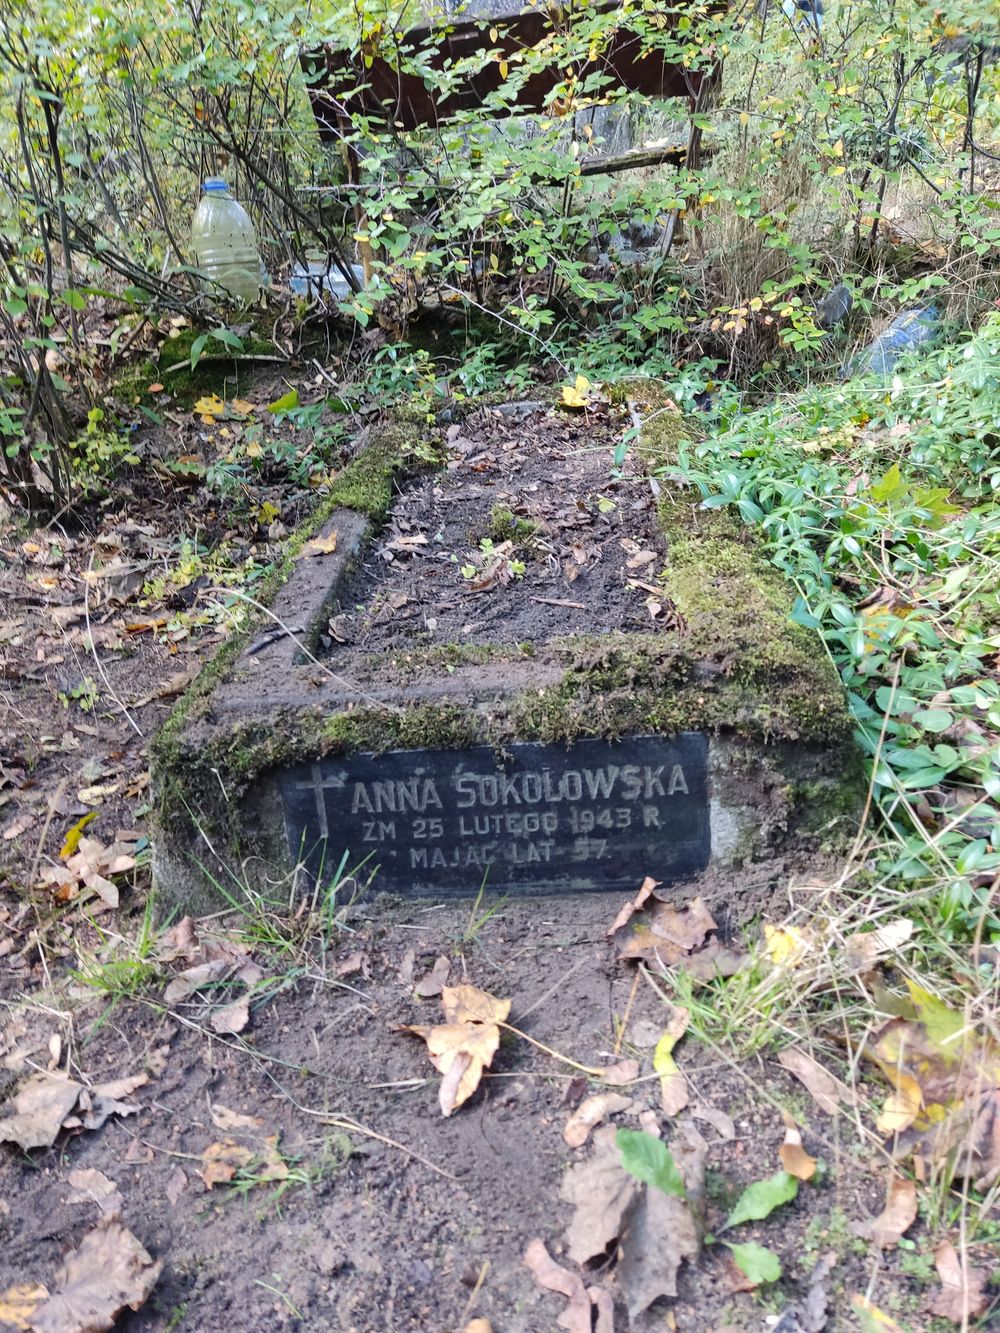 Tombstone of Anna Sokolowska